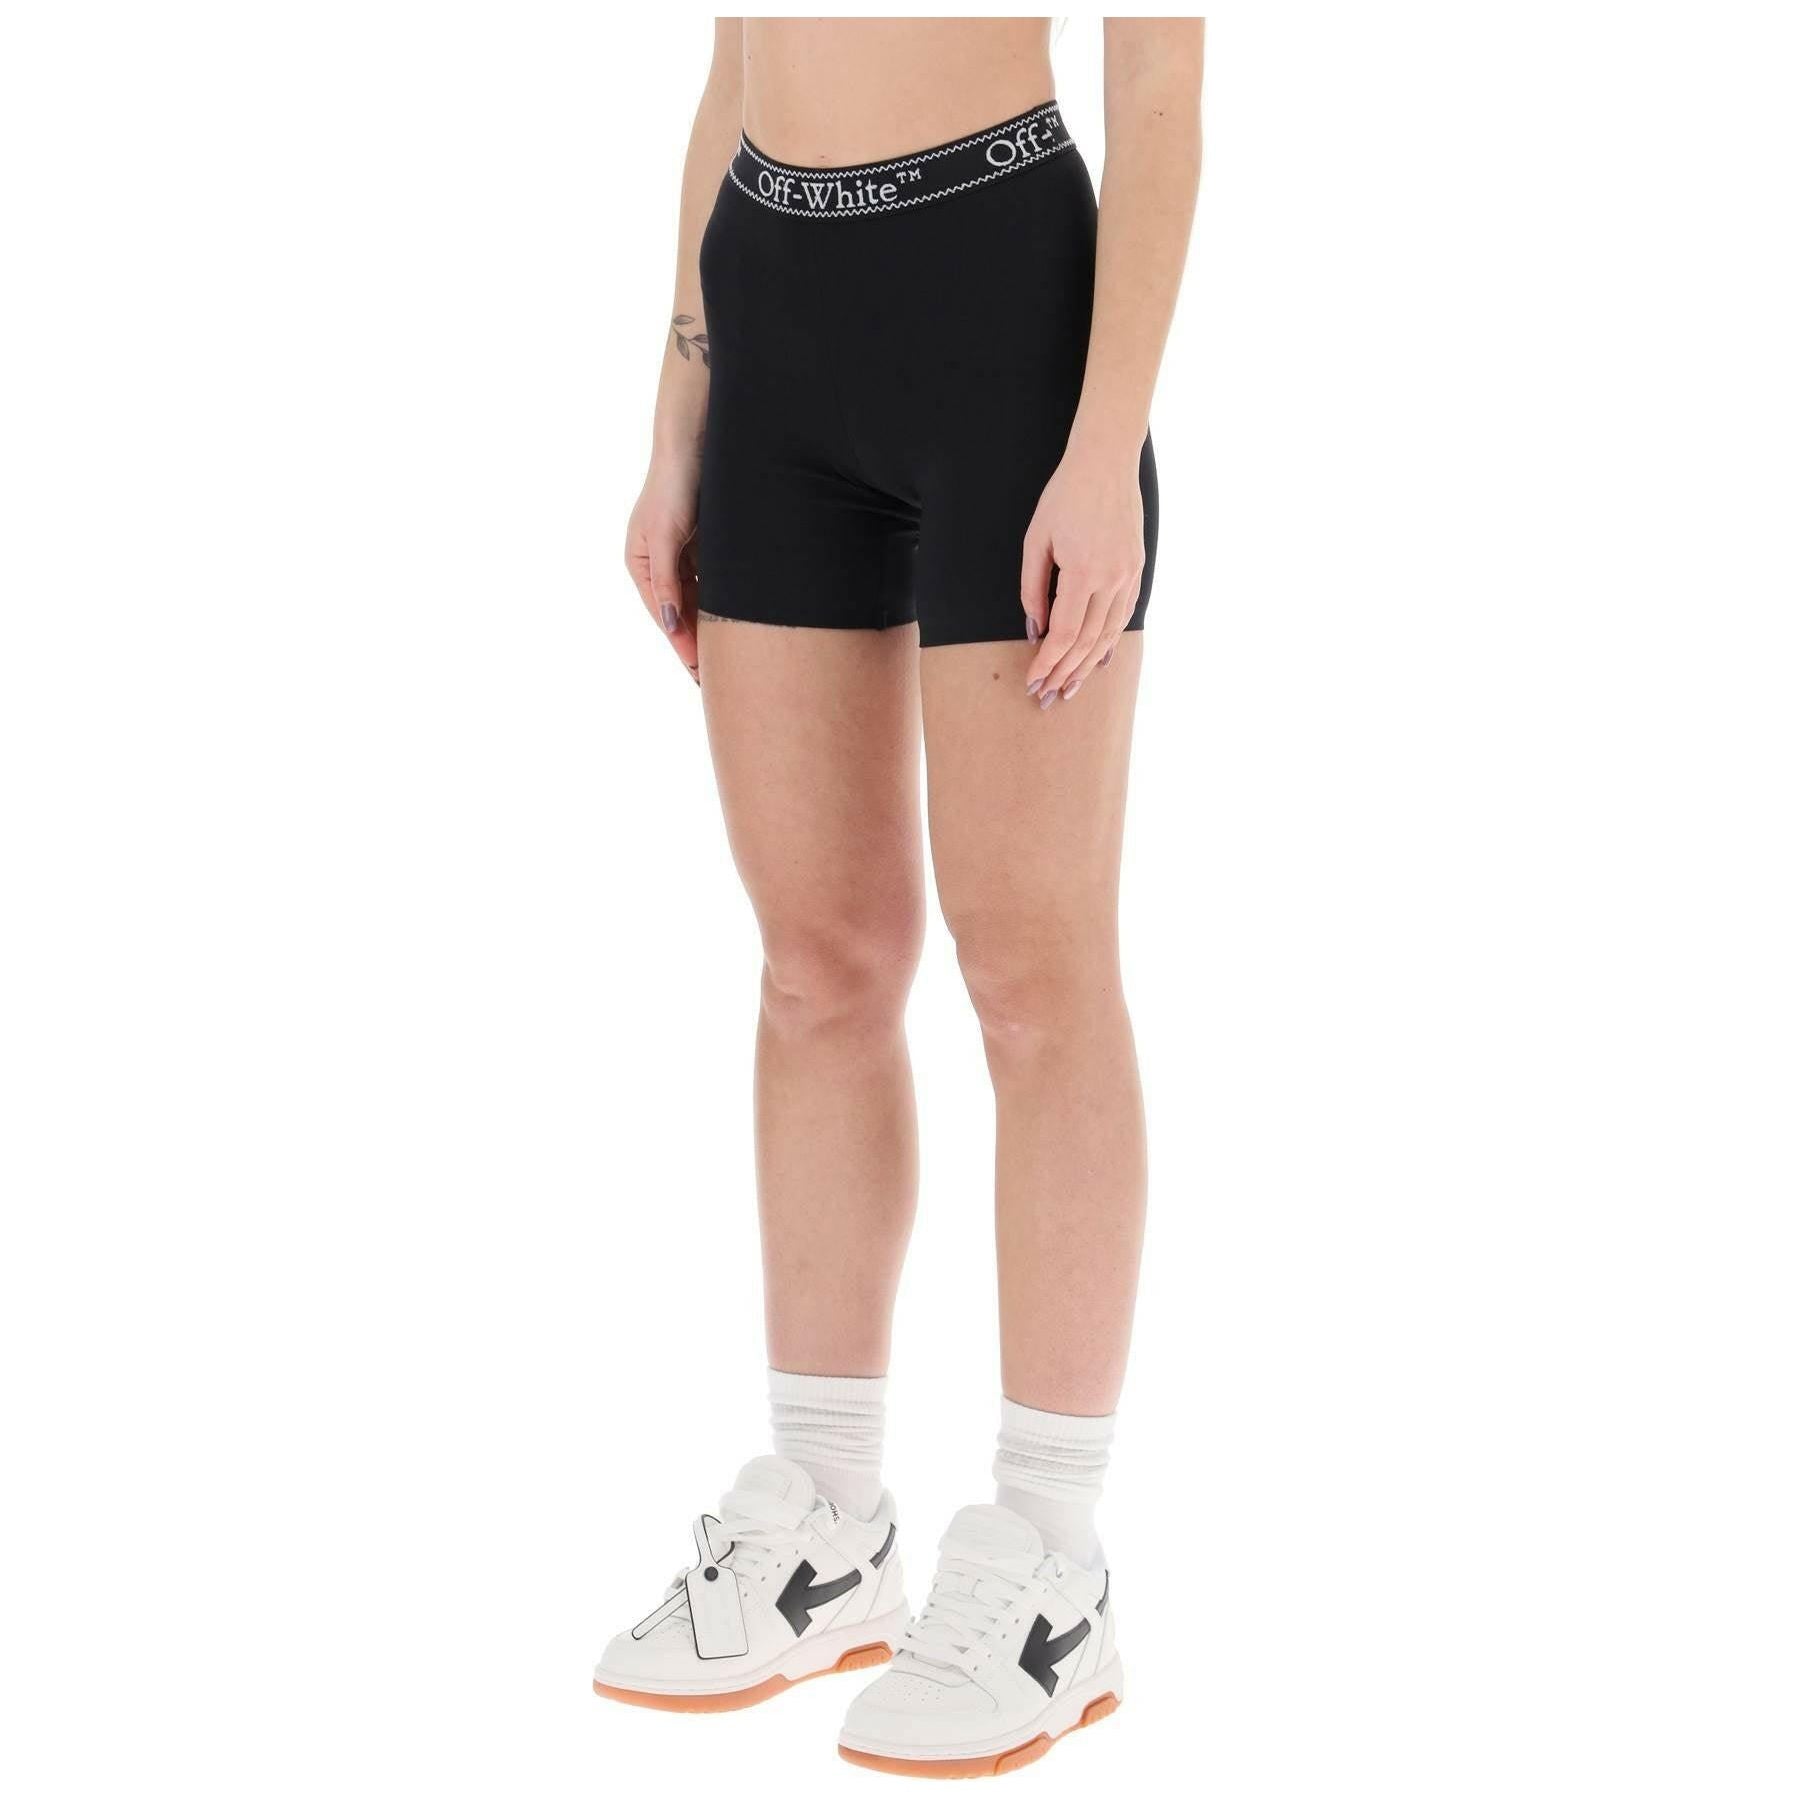 Sporty Shorts With Branded Stripe OFF-WHITE JOHN JULIA.